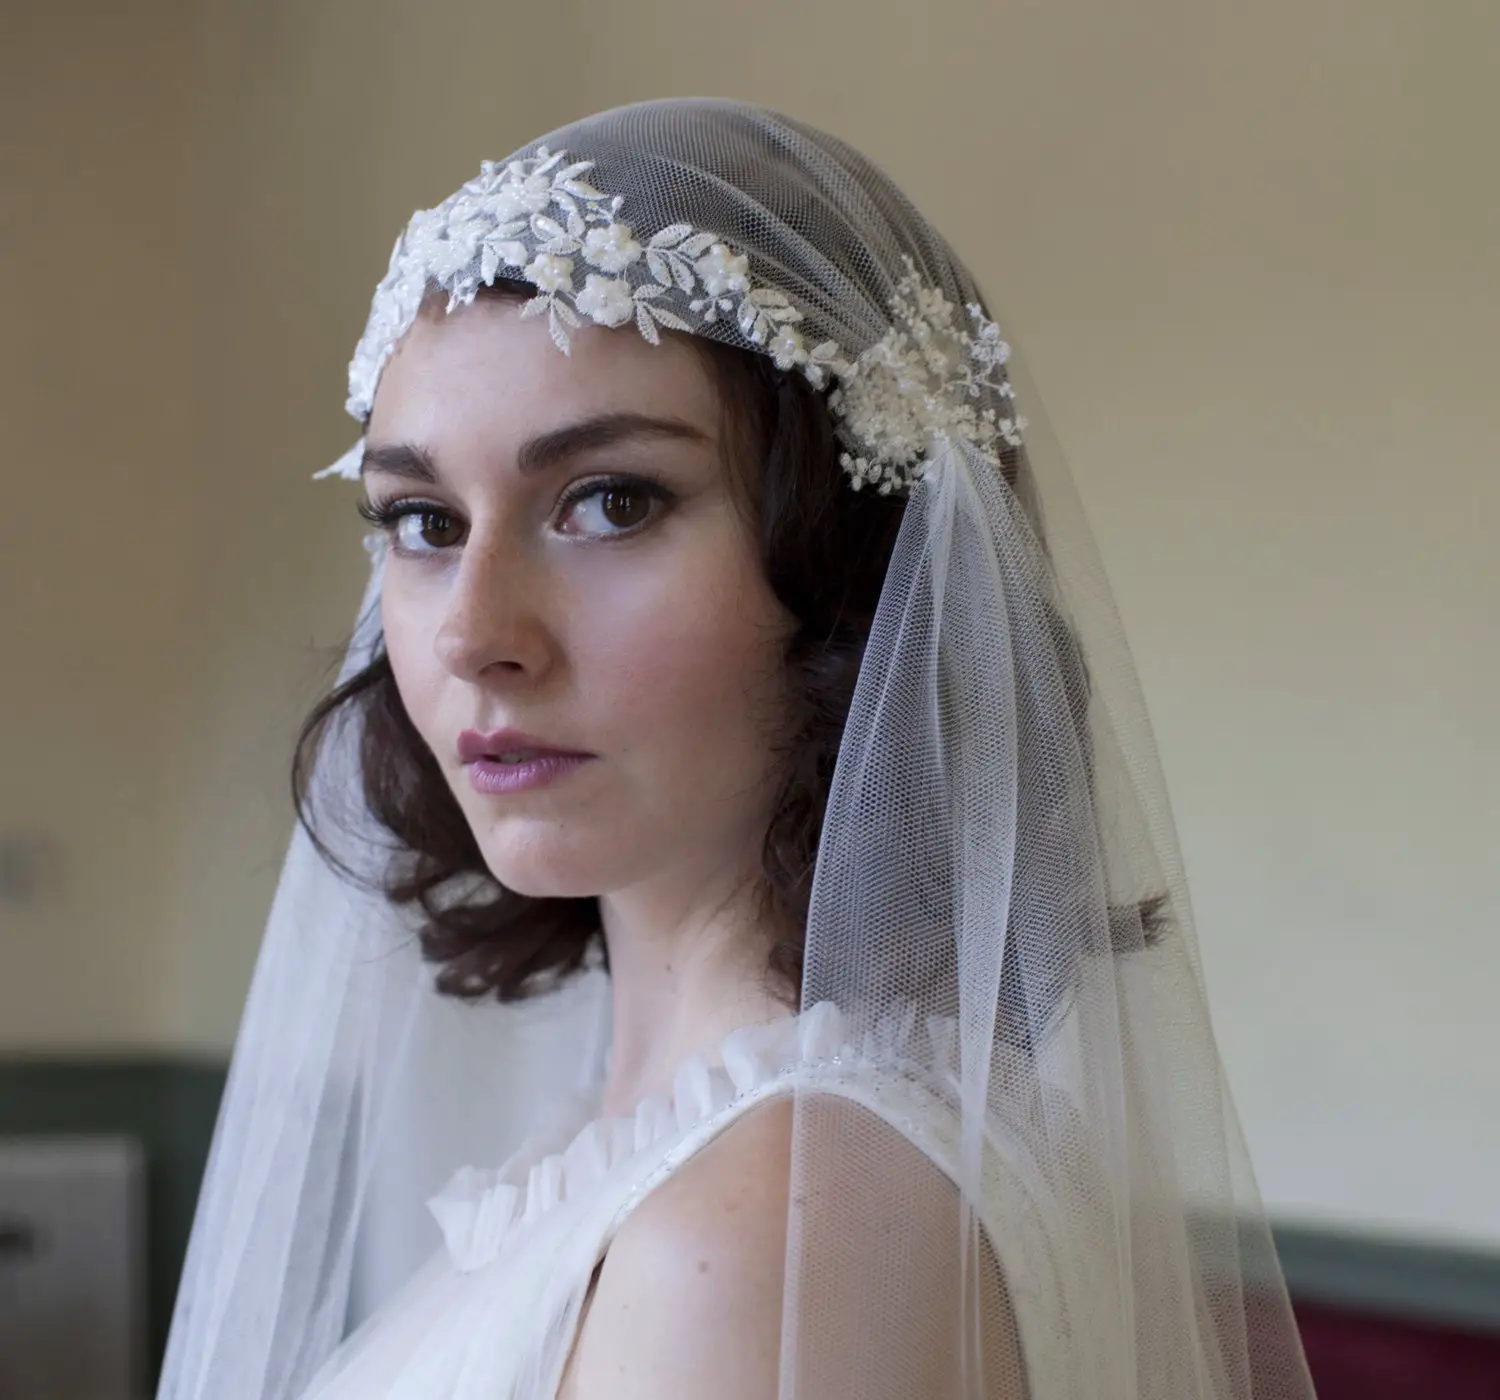 Breathtaking Wedding Veil Photos to Inspire Your Own ...